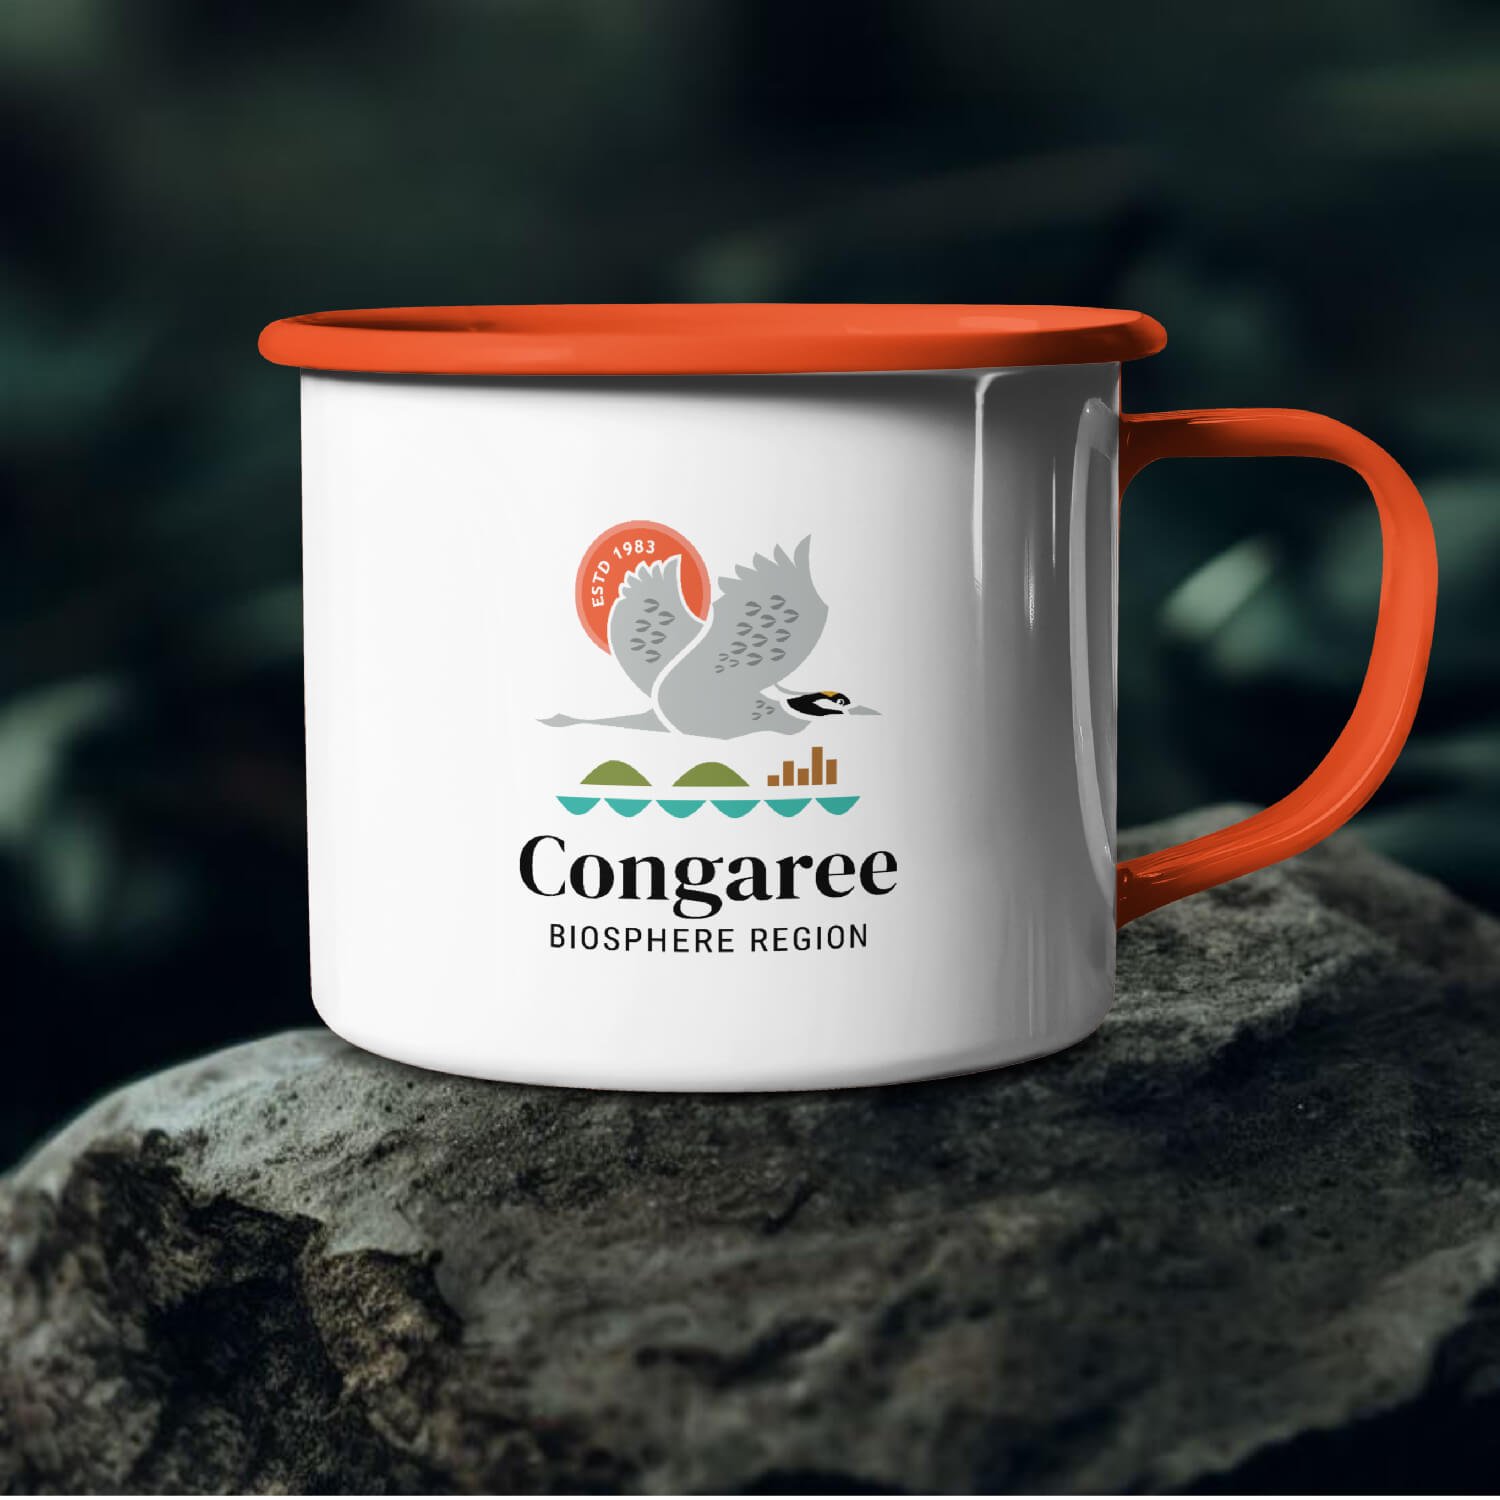 congaree-biosphere-region-logo-on-white-camping-mug.jpg